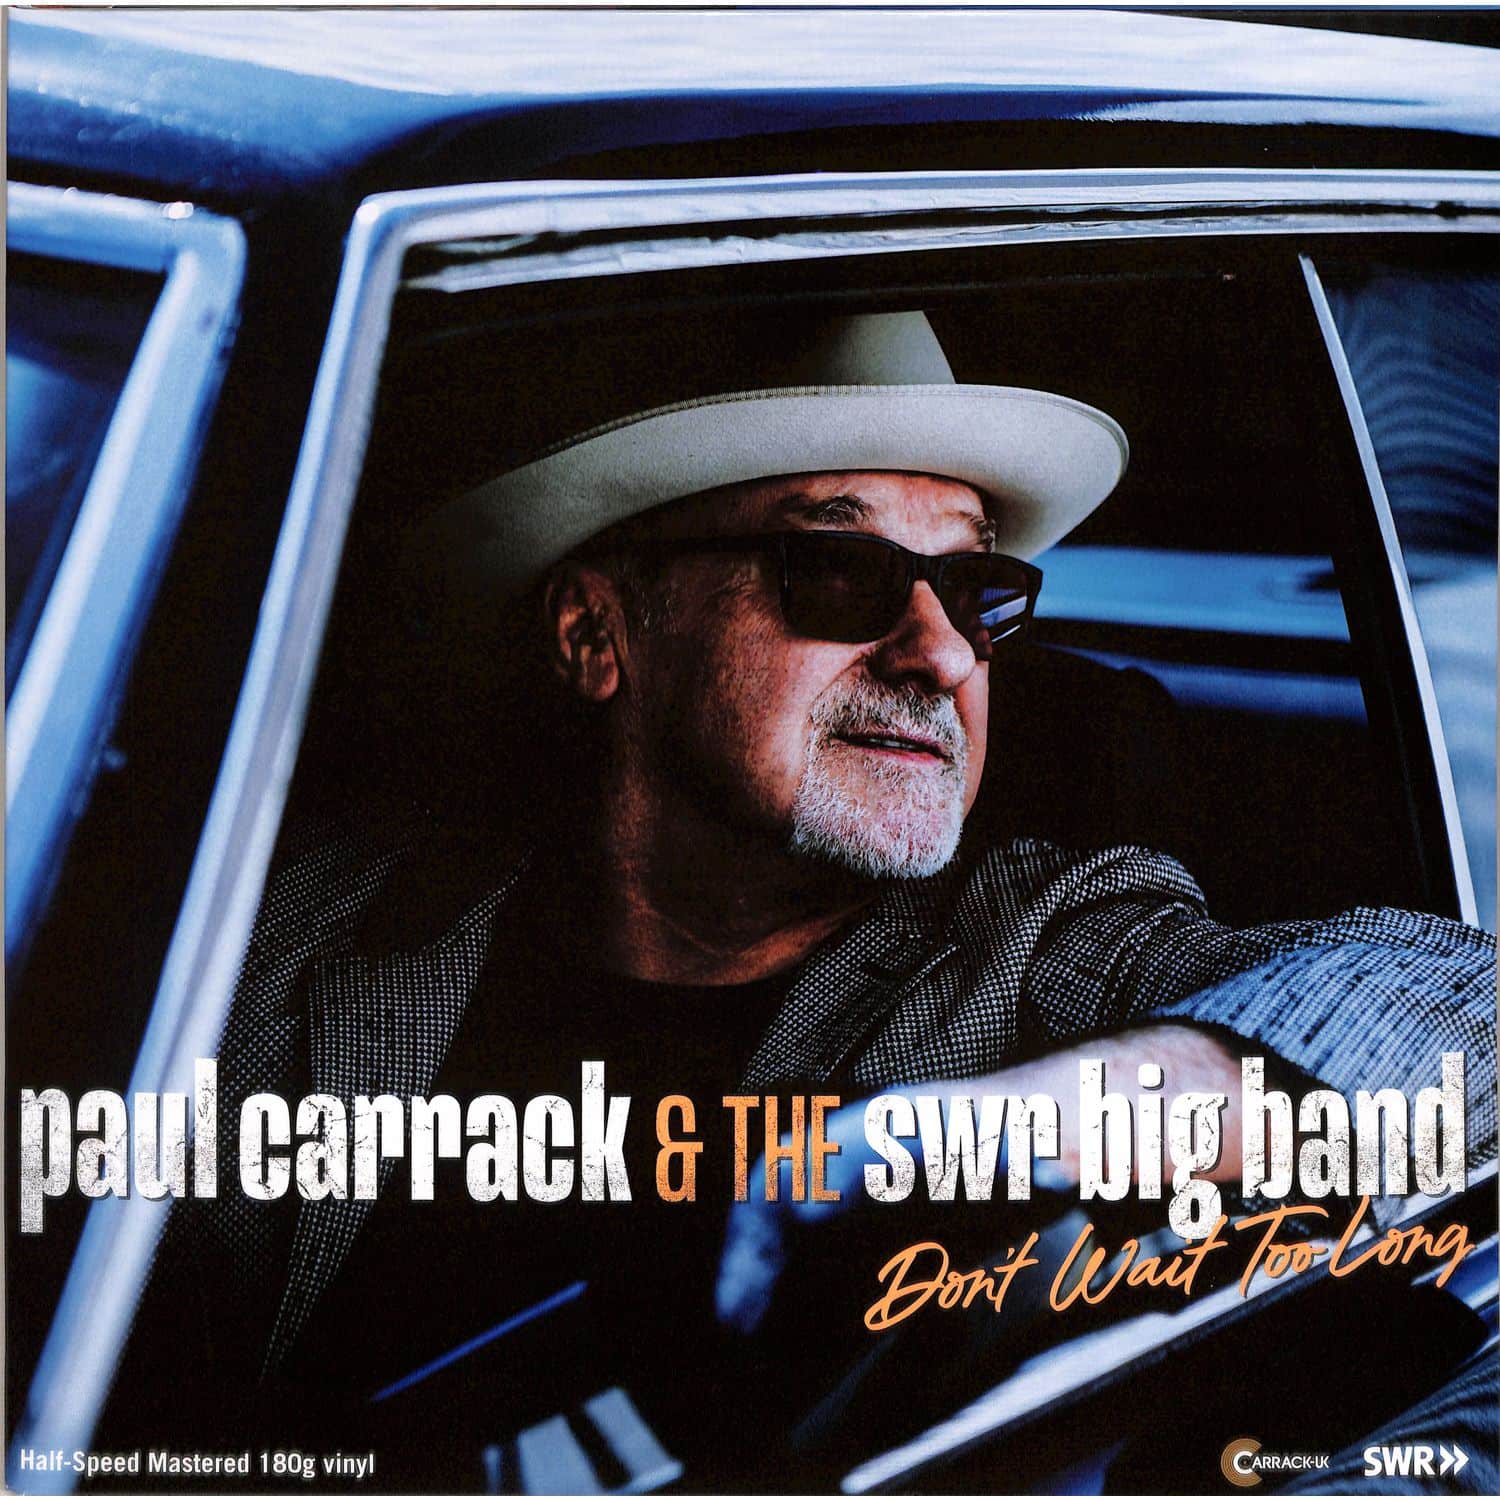 Paul Carrack & The SWR Big Band - DON T WAIT TOO LONG 